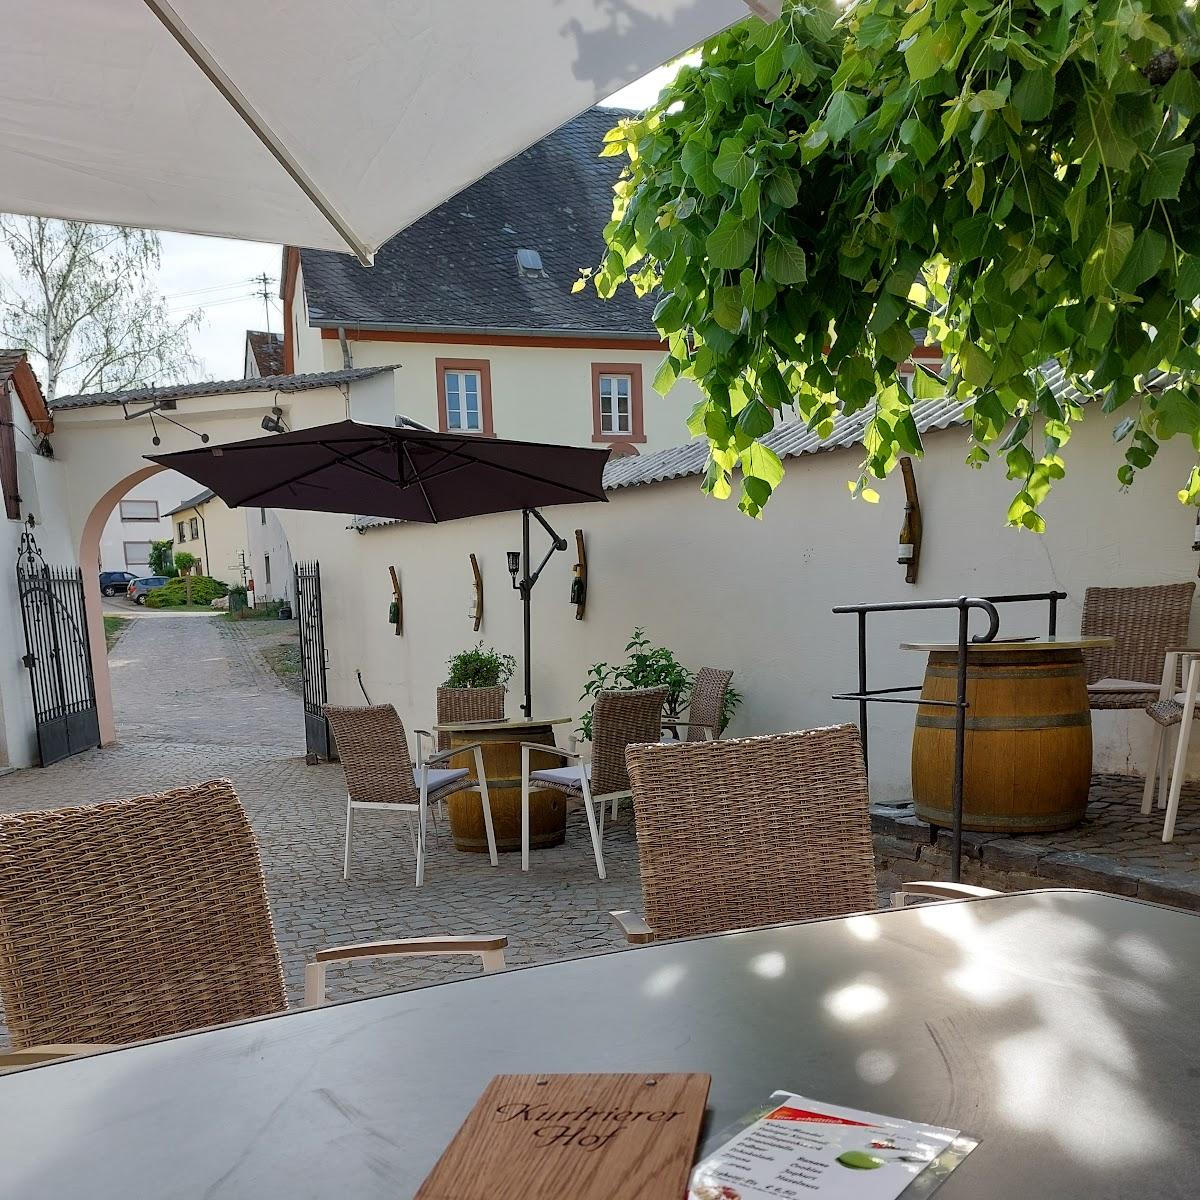 Restaurant "Eisfenster im Kurtrierer Hof" in Leiwen